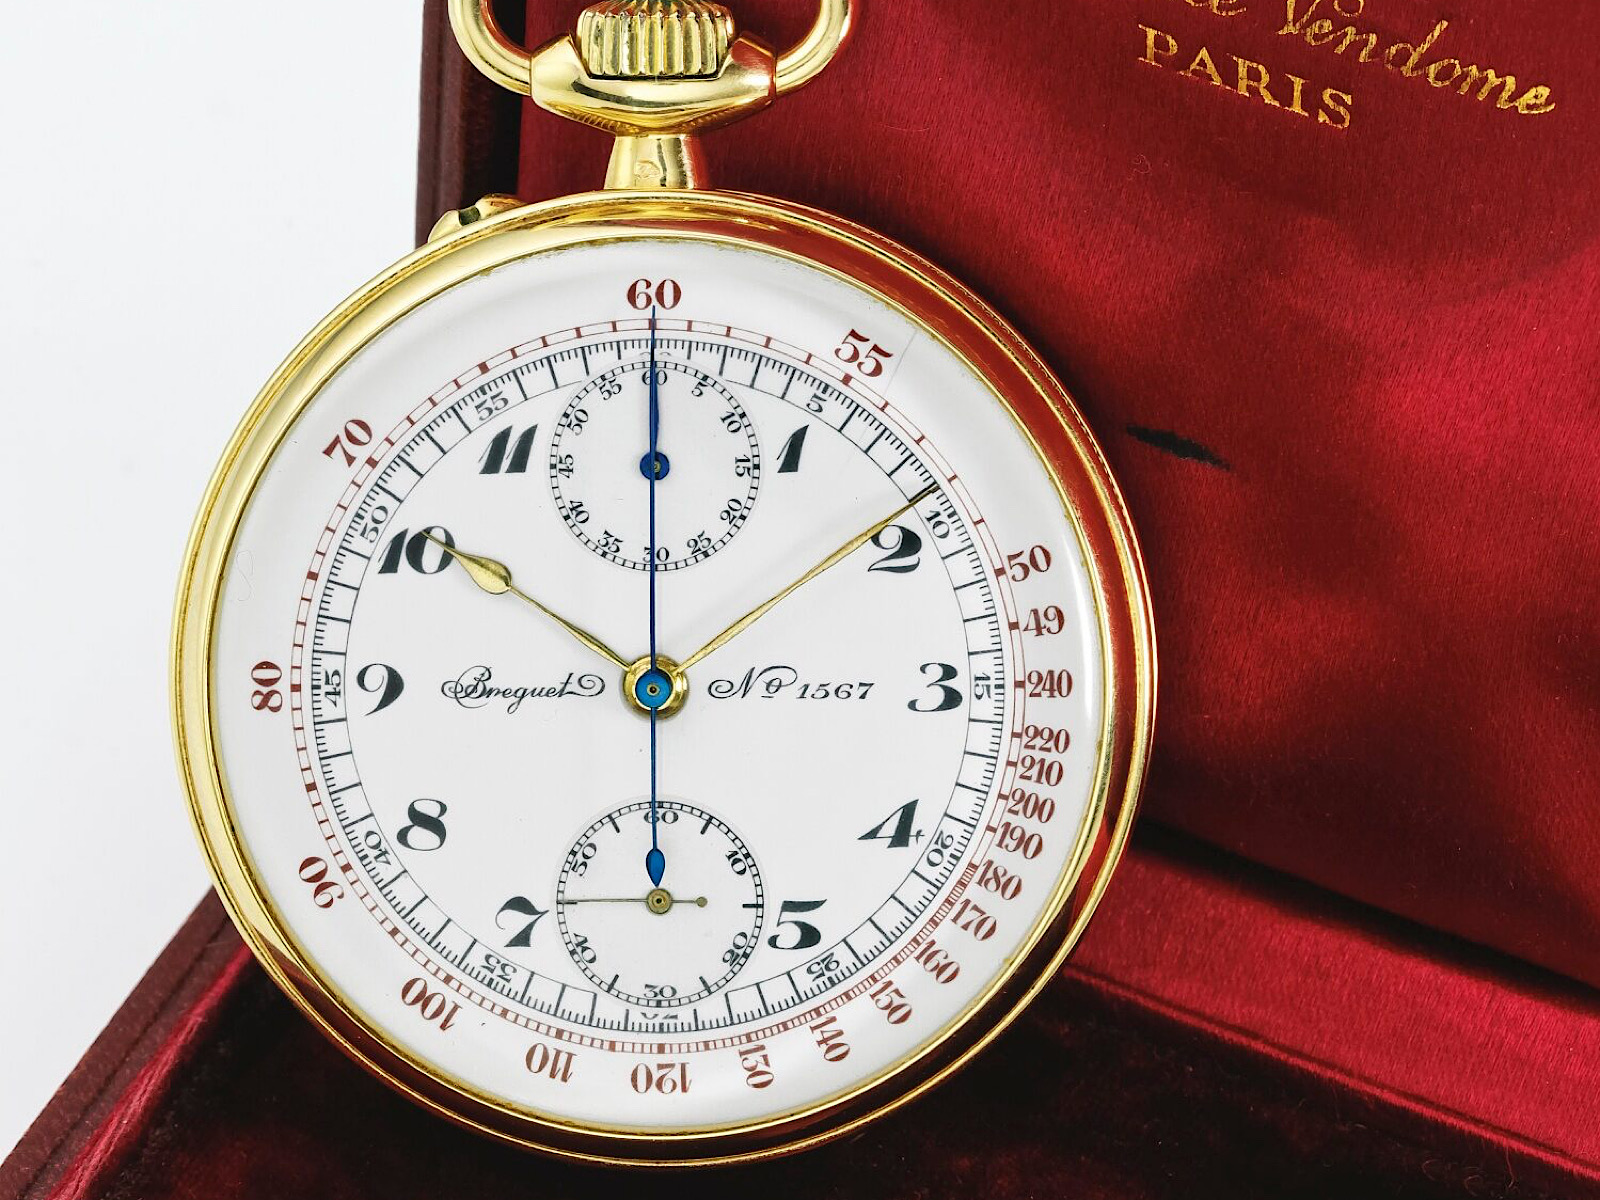 Đồng hồ bỏ túi Breguet Chronograph pulsometer năm 1880